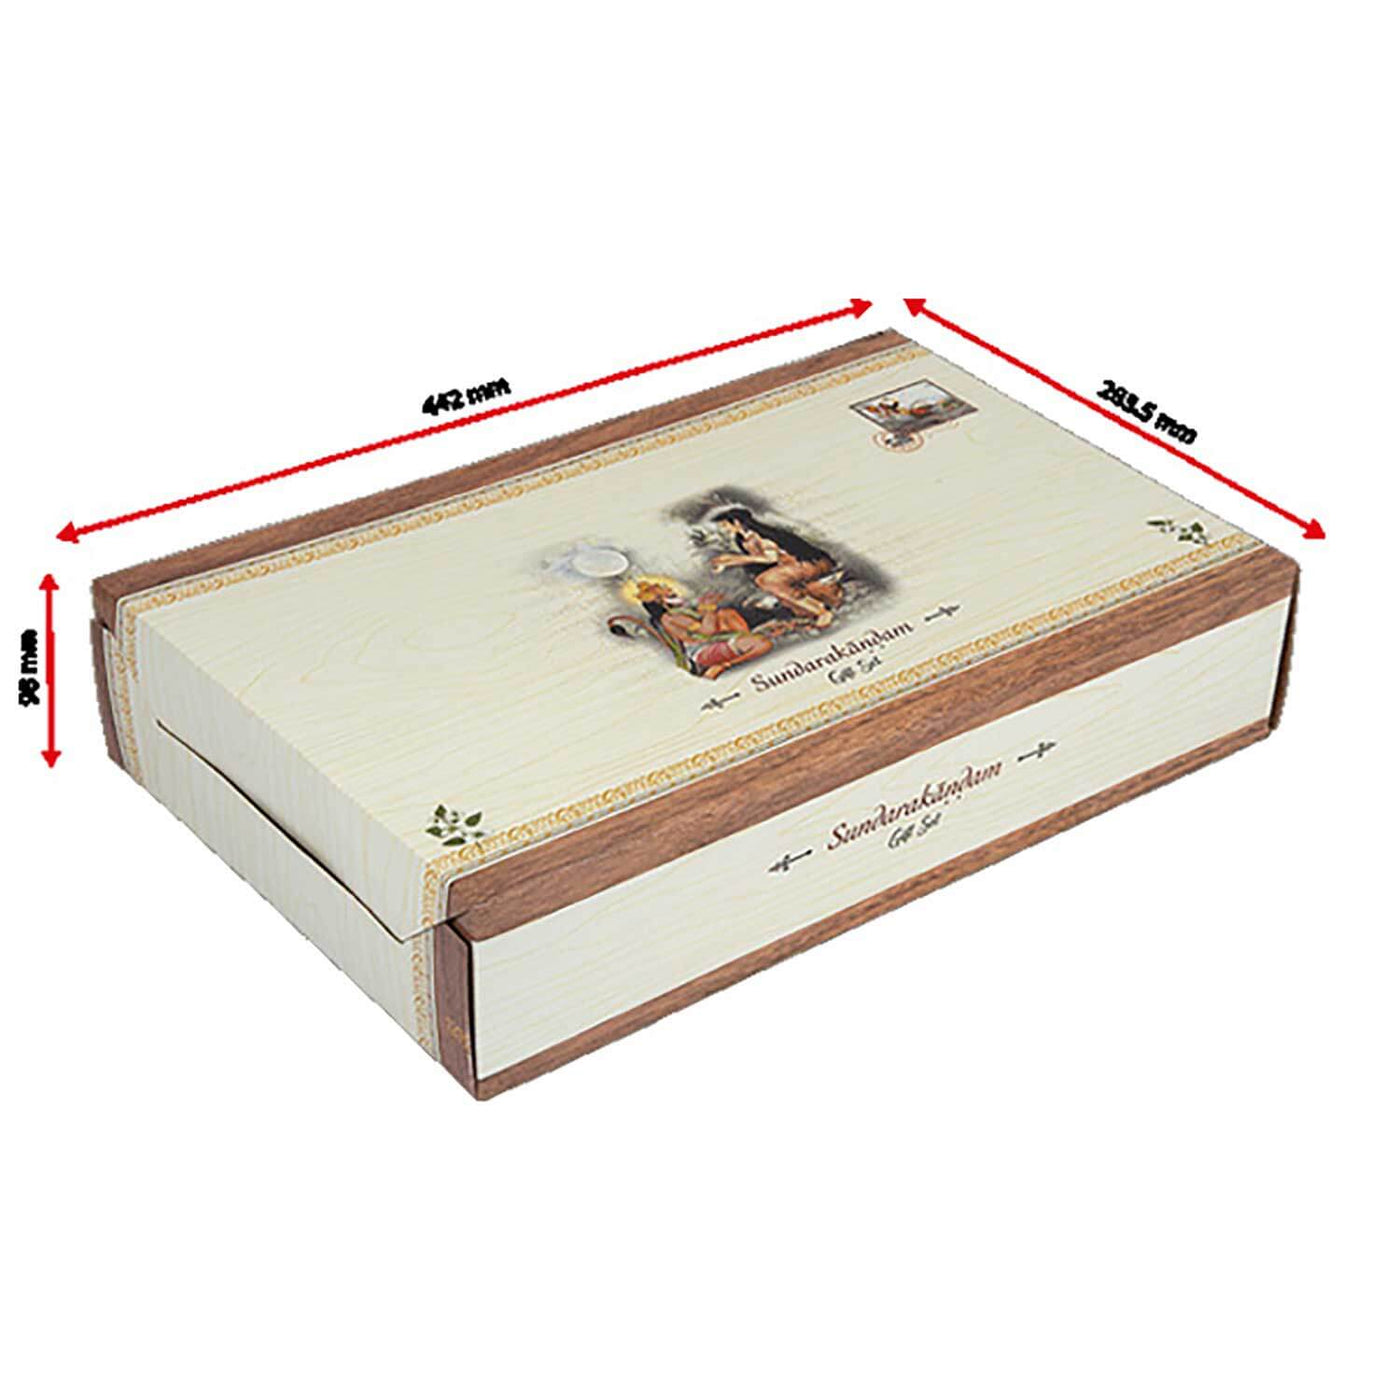 Vedic Cosmos Gift Set Sundara-Kanda In Wooden Box - A6 5